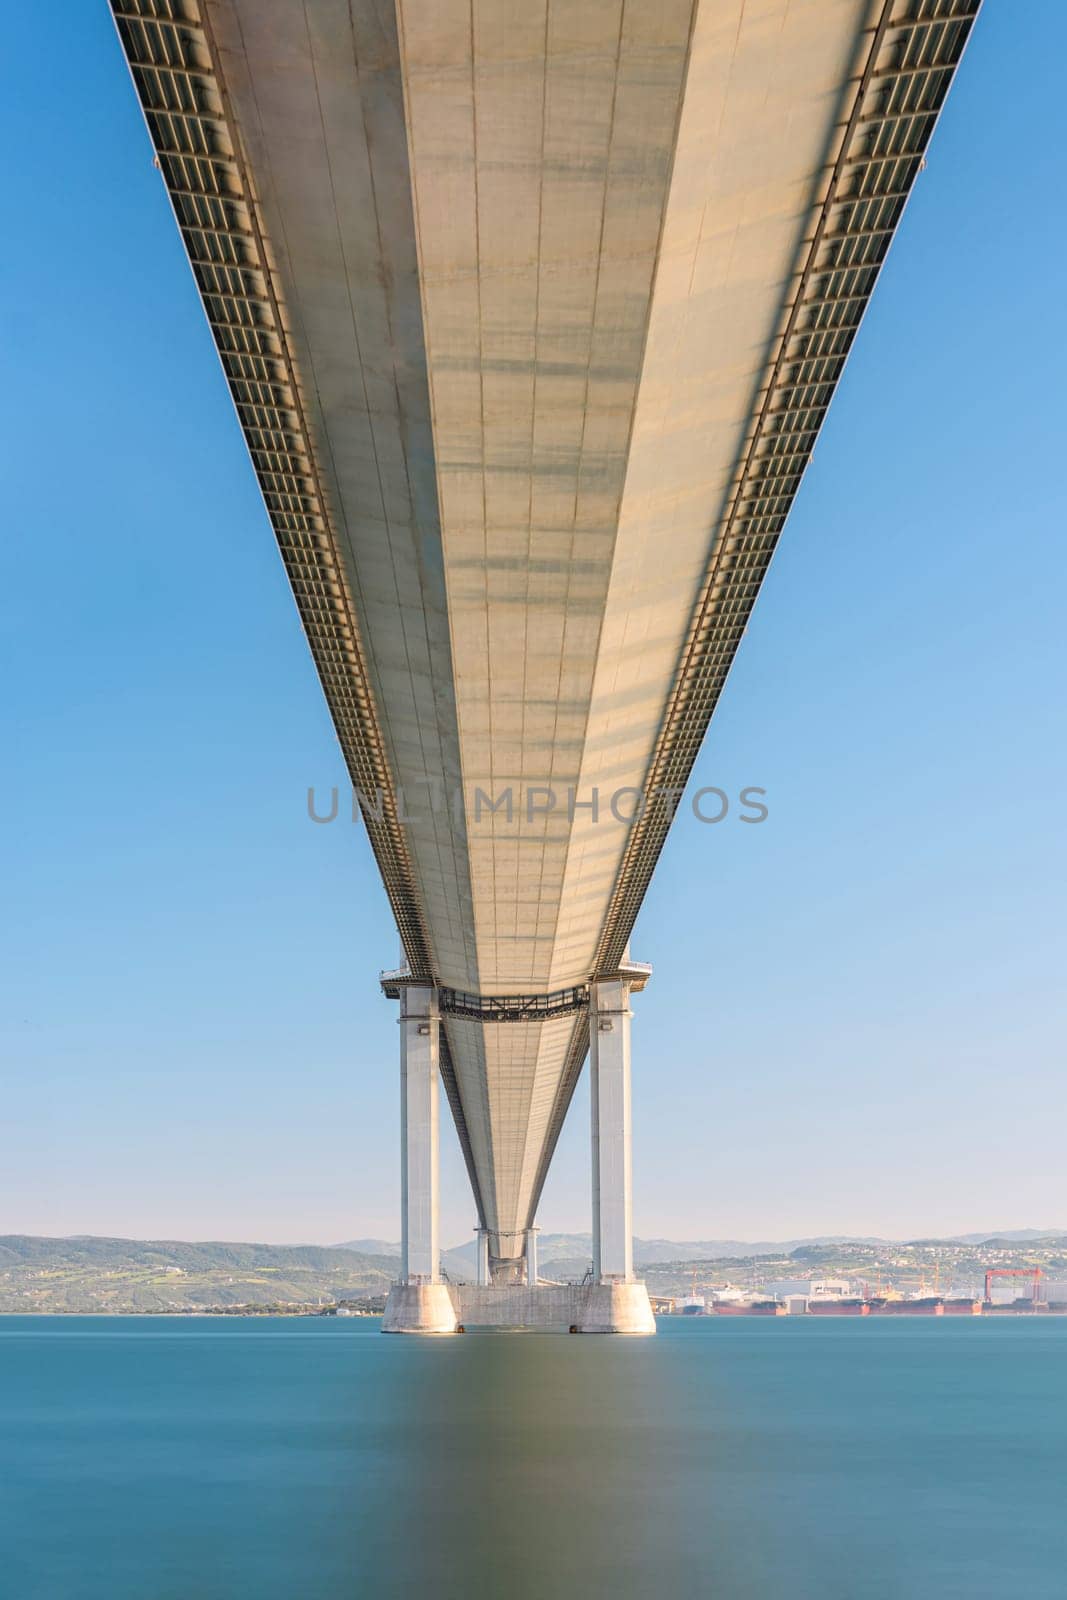 Osmangazi Bridge (Izmit Bay Bridge) located in Izmit, Kocaeli, Turkey. Suspension bridge captured with long exposure technique by Sonat